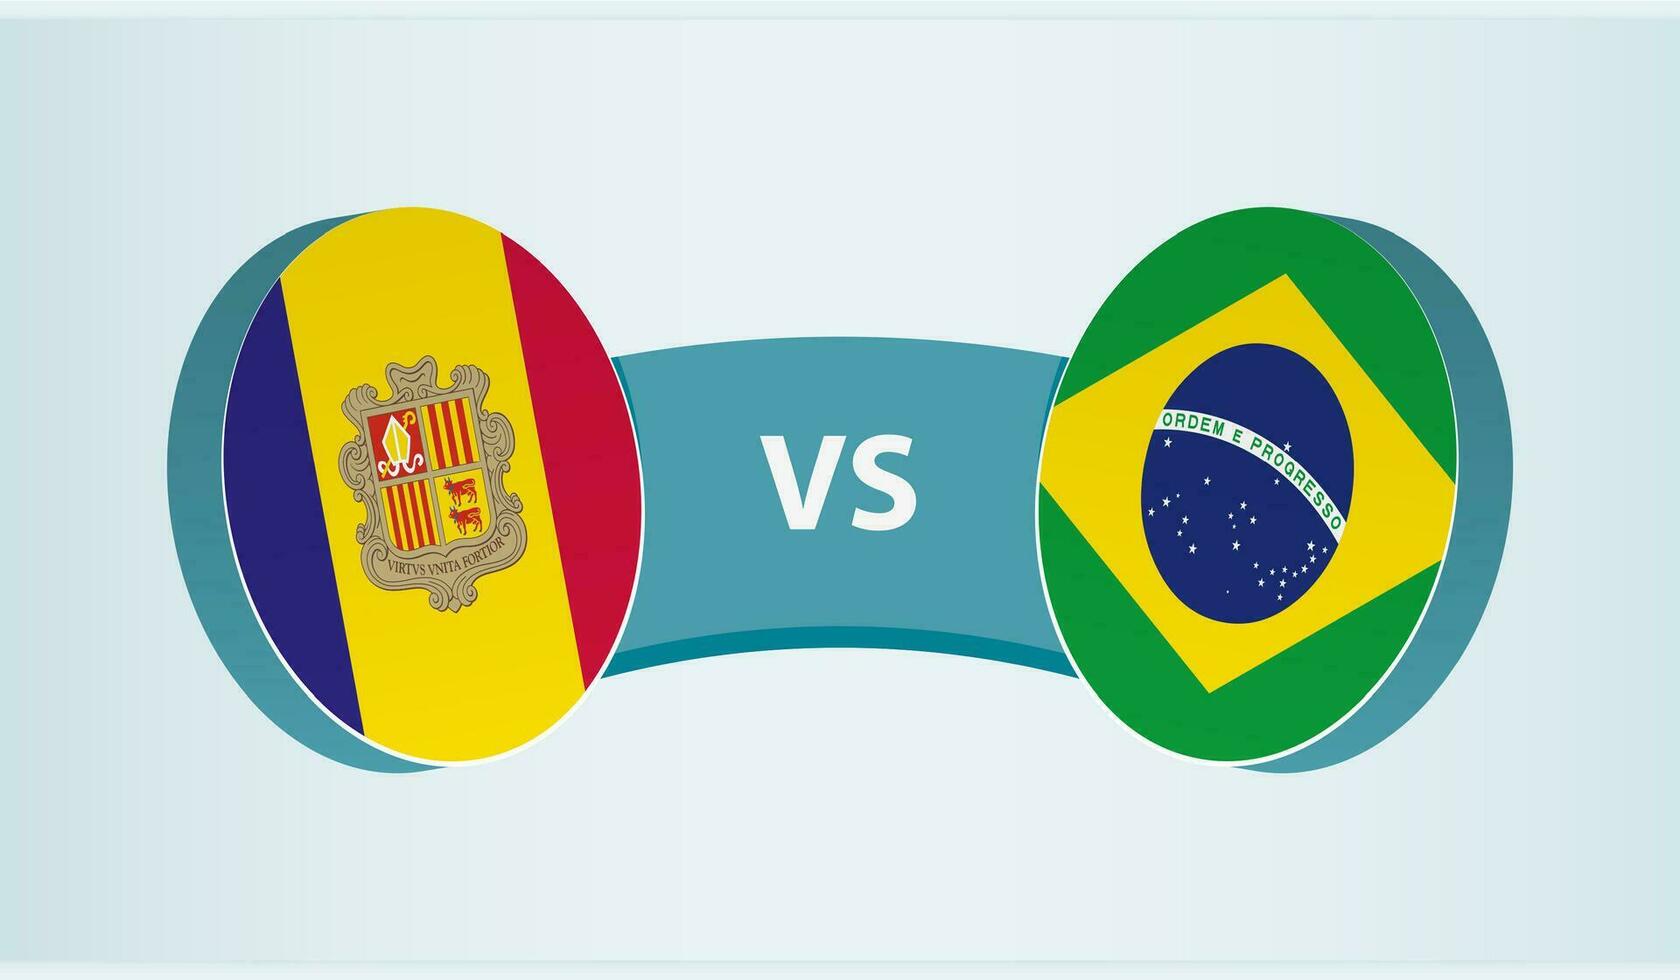 andorra versus brasil, equipe Esportes concorrência conceito. vetor